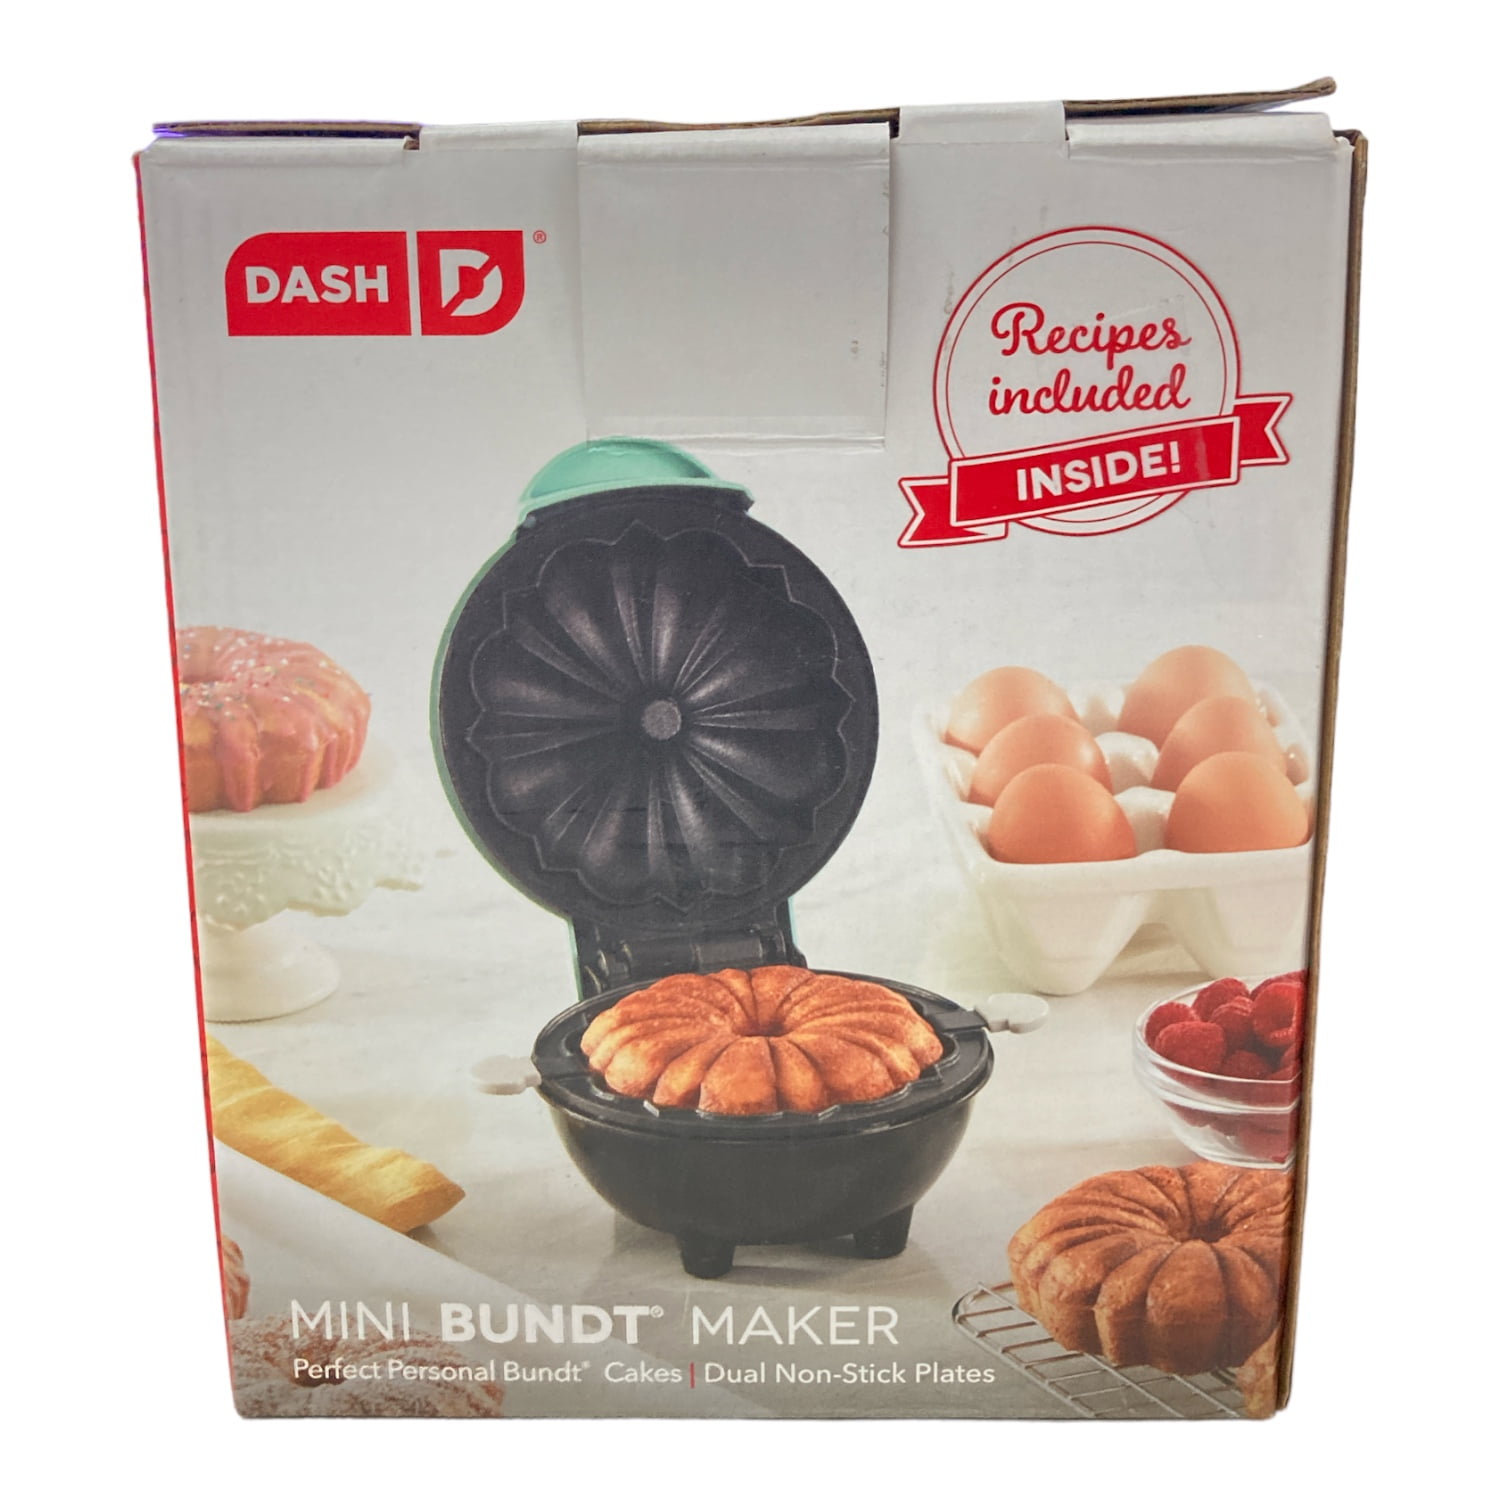 Dash Mini Bundt Maker Unboxing Review And Making A Mug Cake 